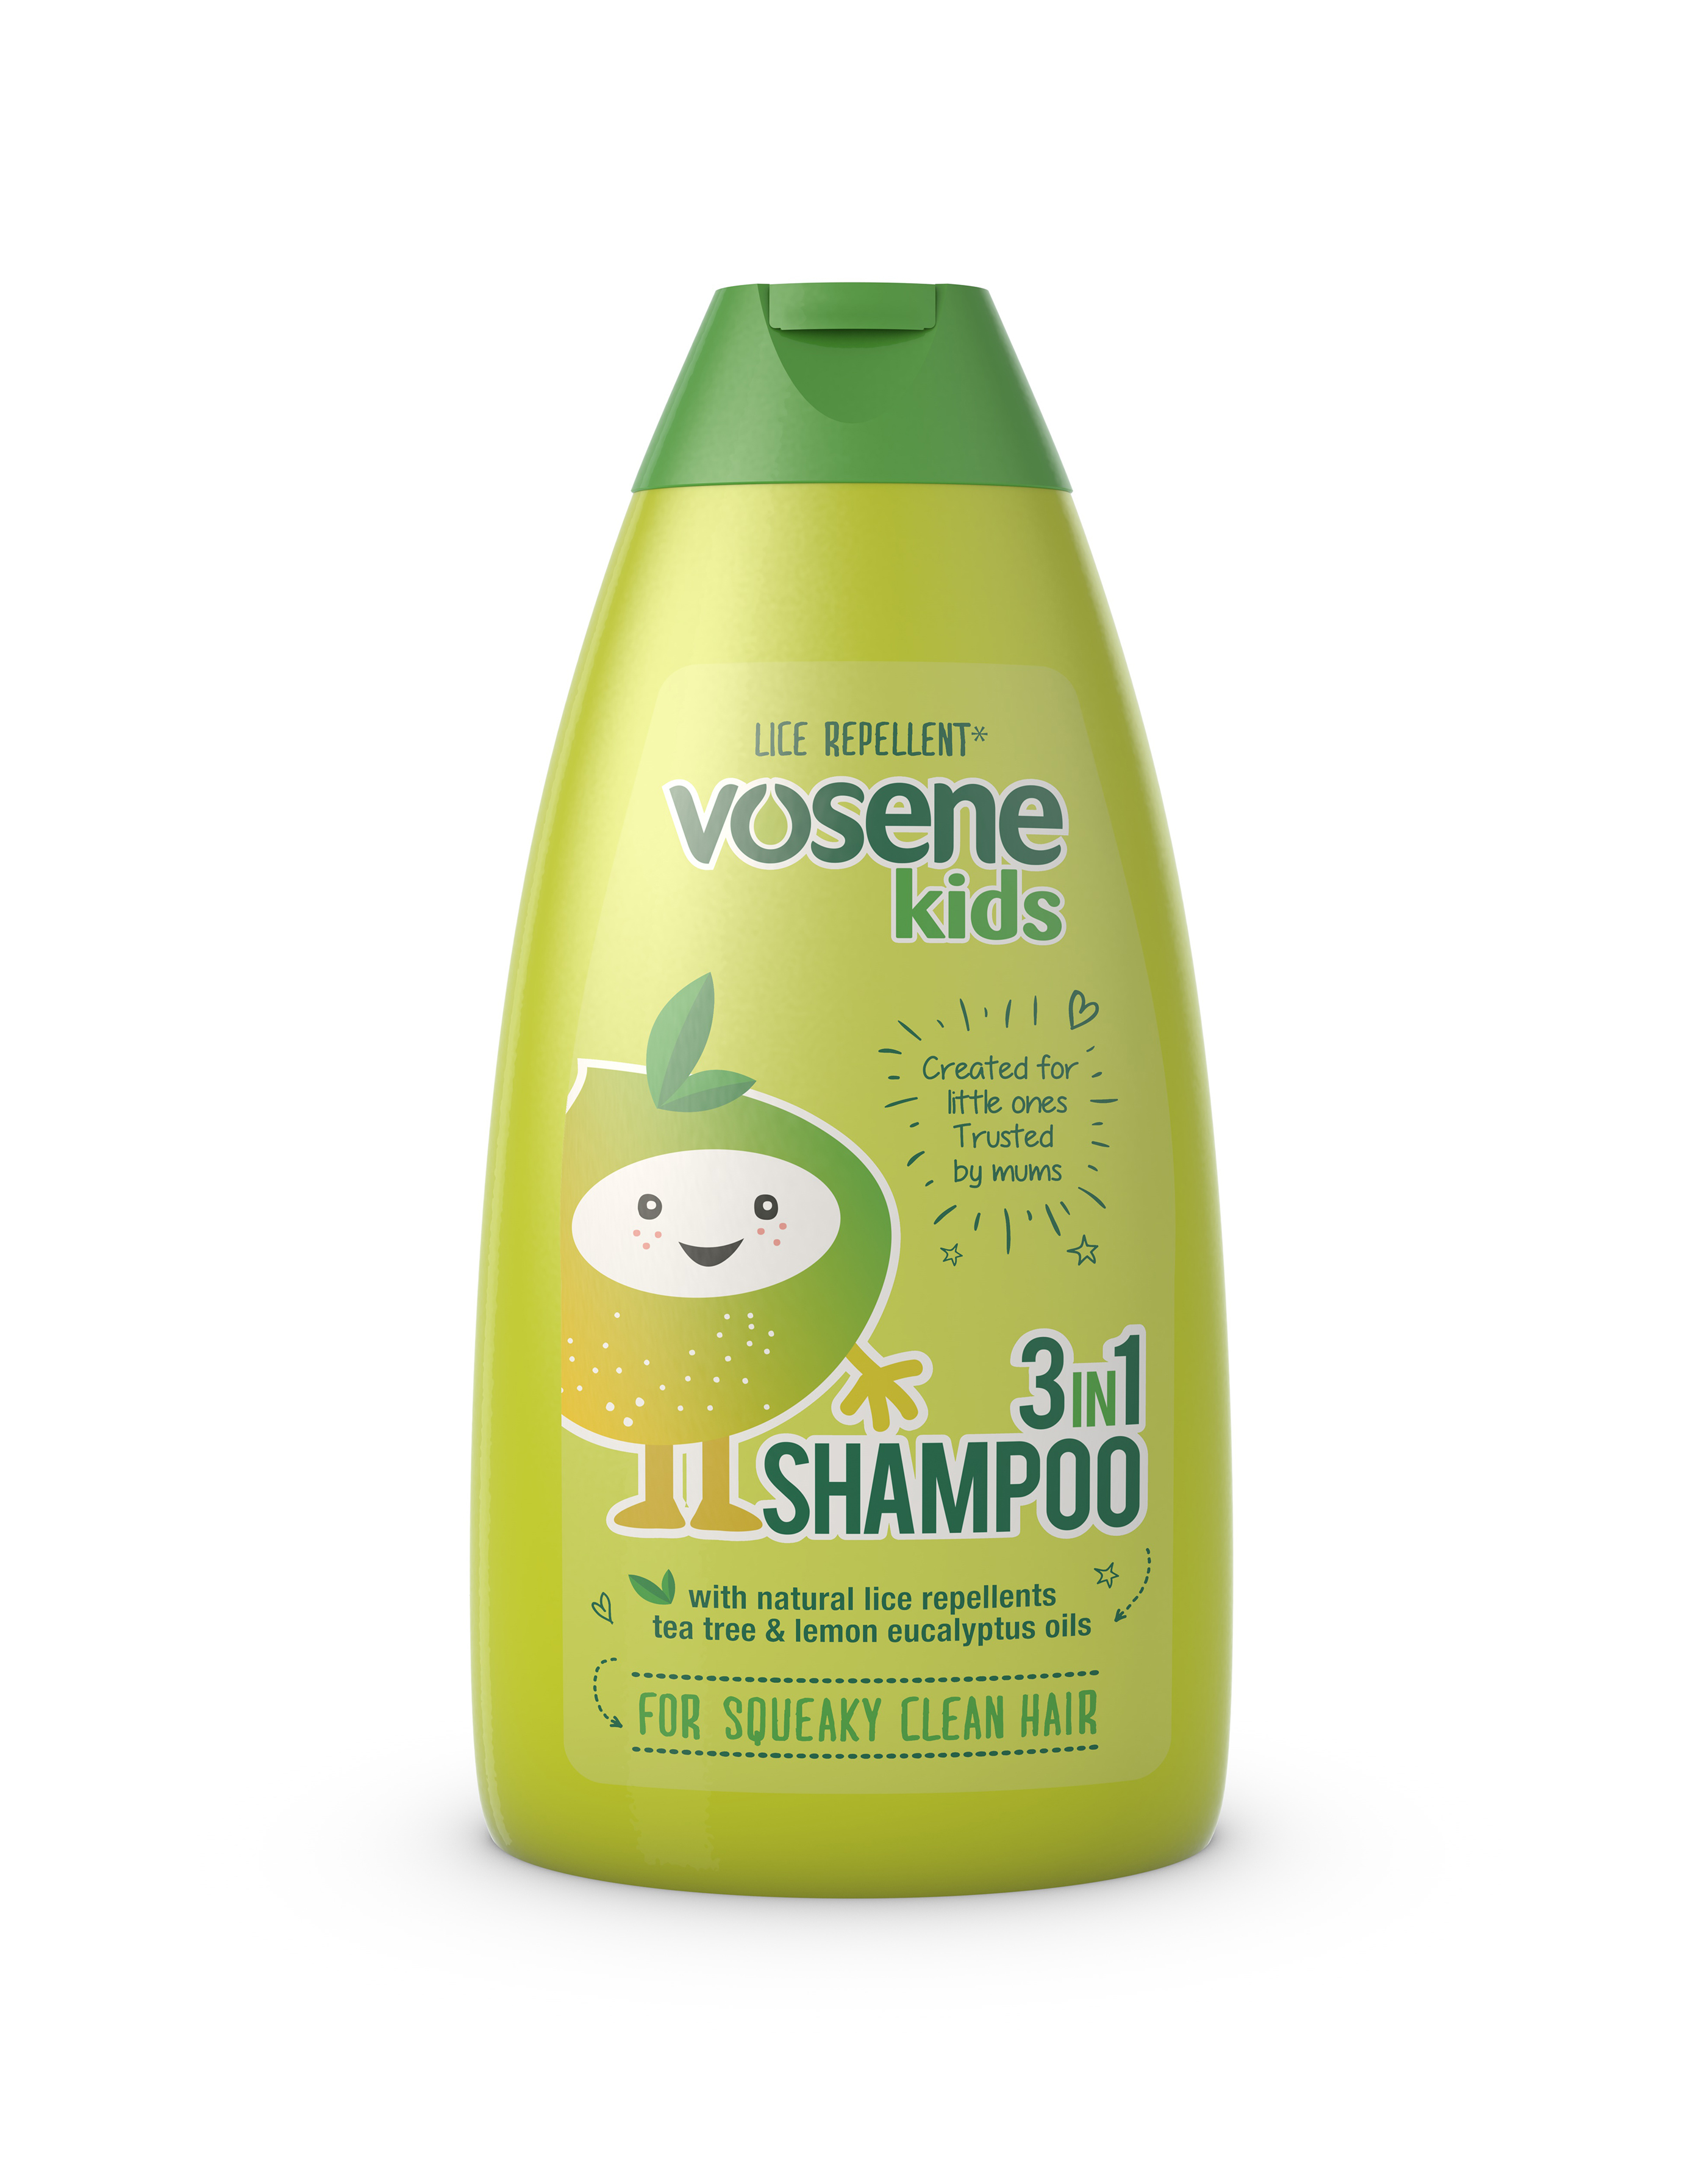 Lice Repellent Vosene Kids 3in1 shampoo